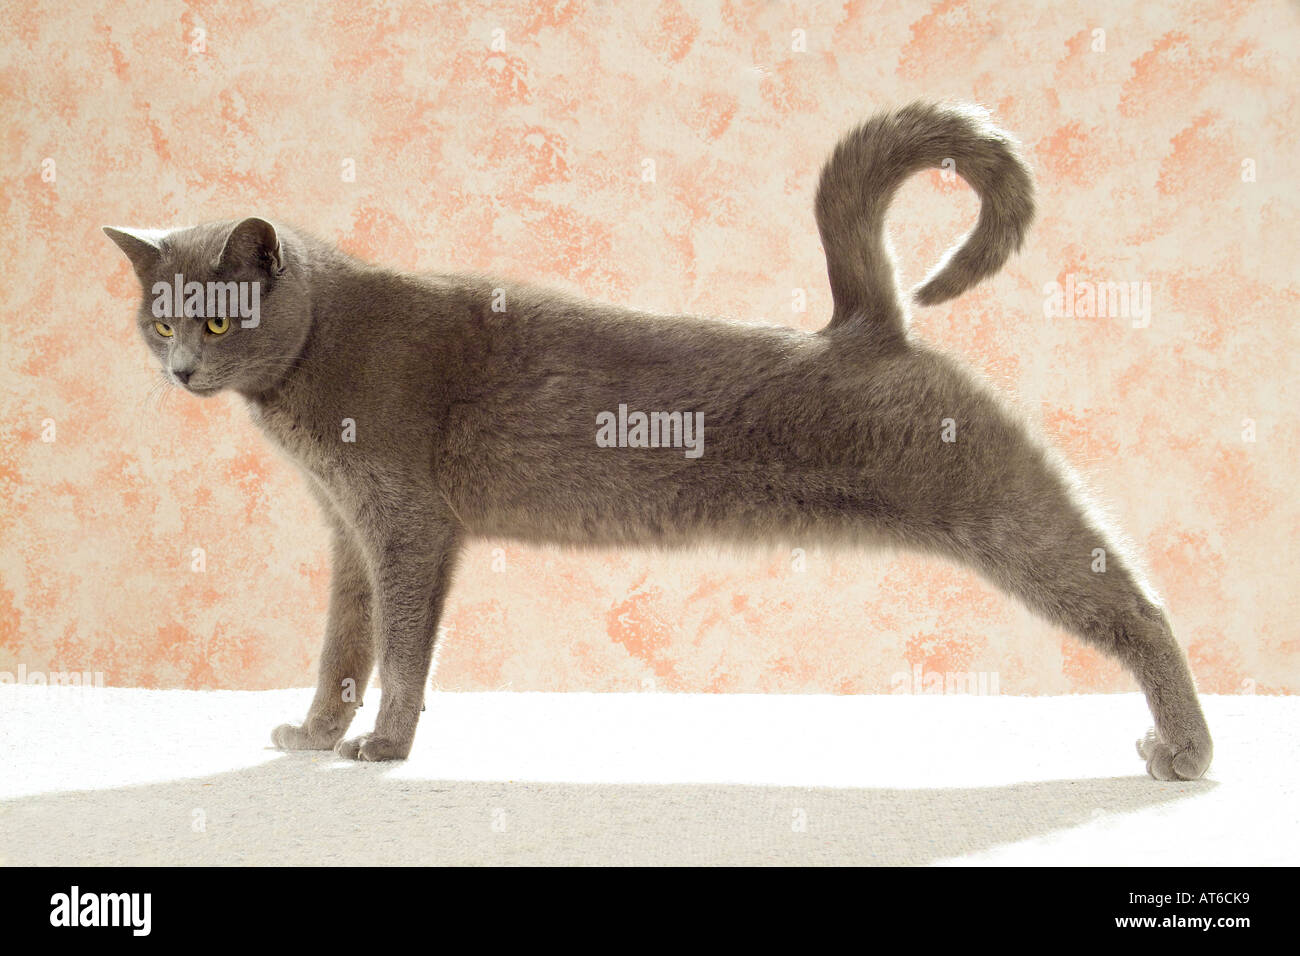 grey cat stretching itself Stock Photo